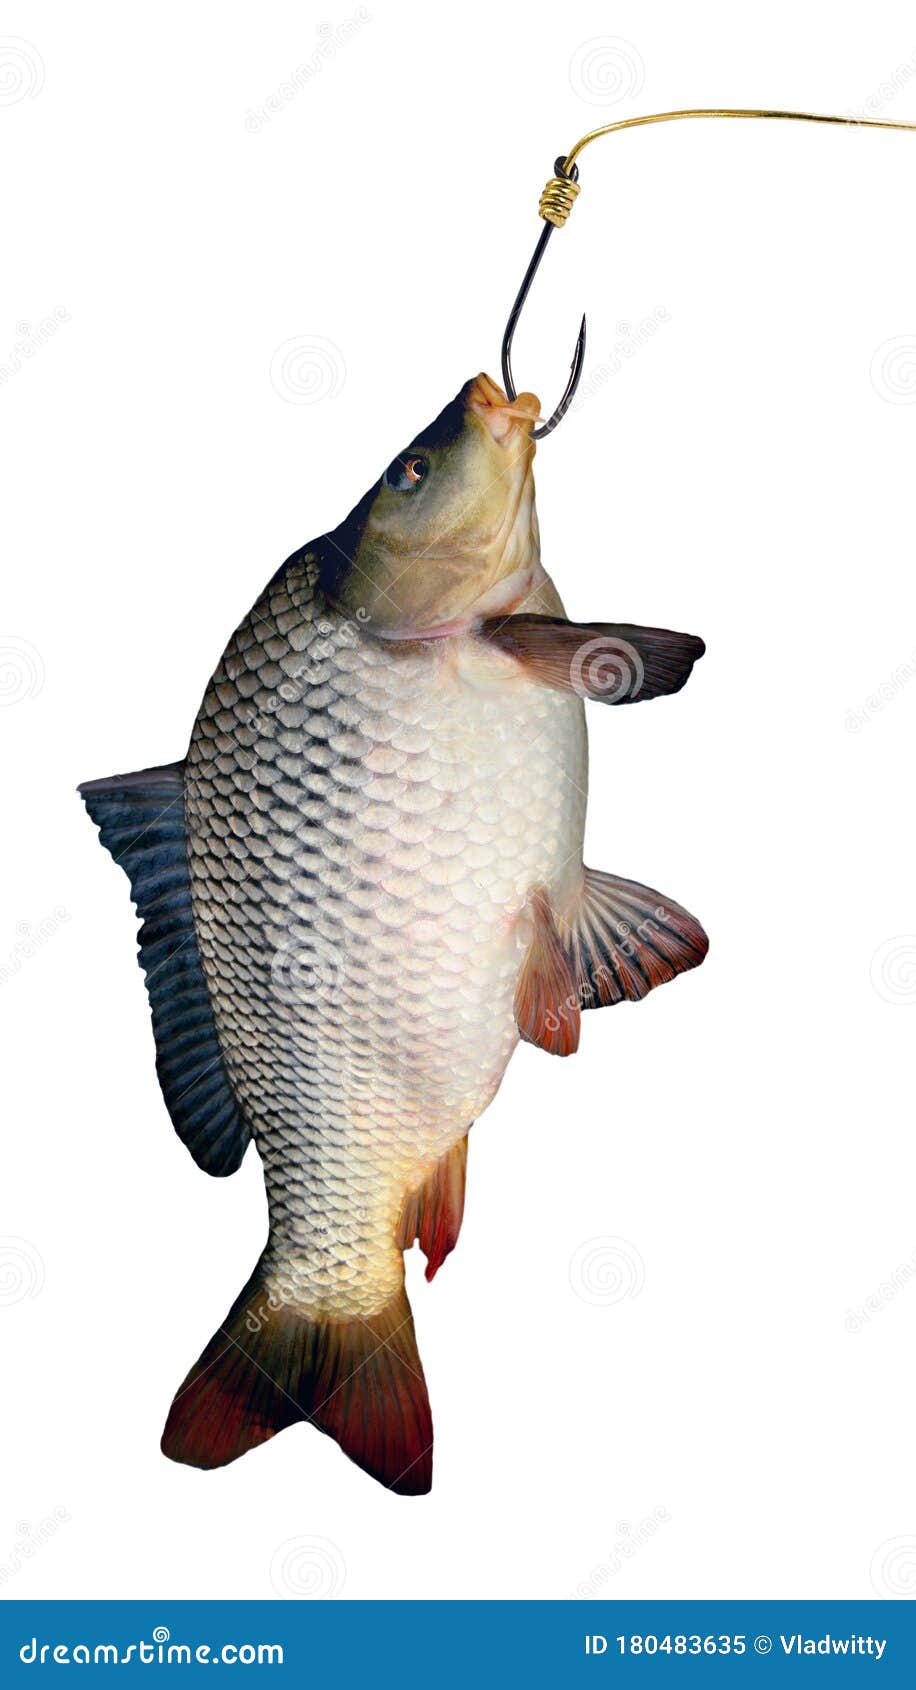 Let the Big Carp Fish Hook Himself Stock Image - Image of carp